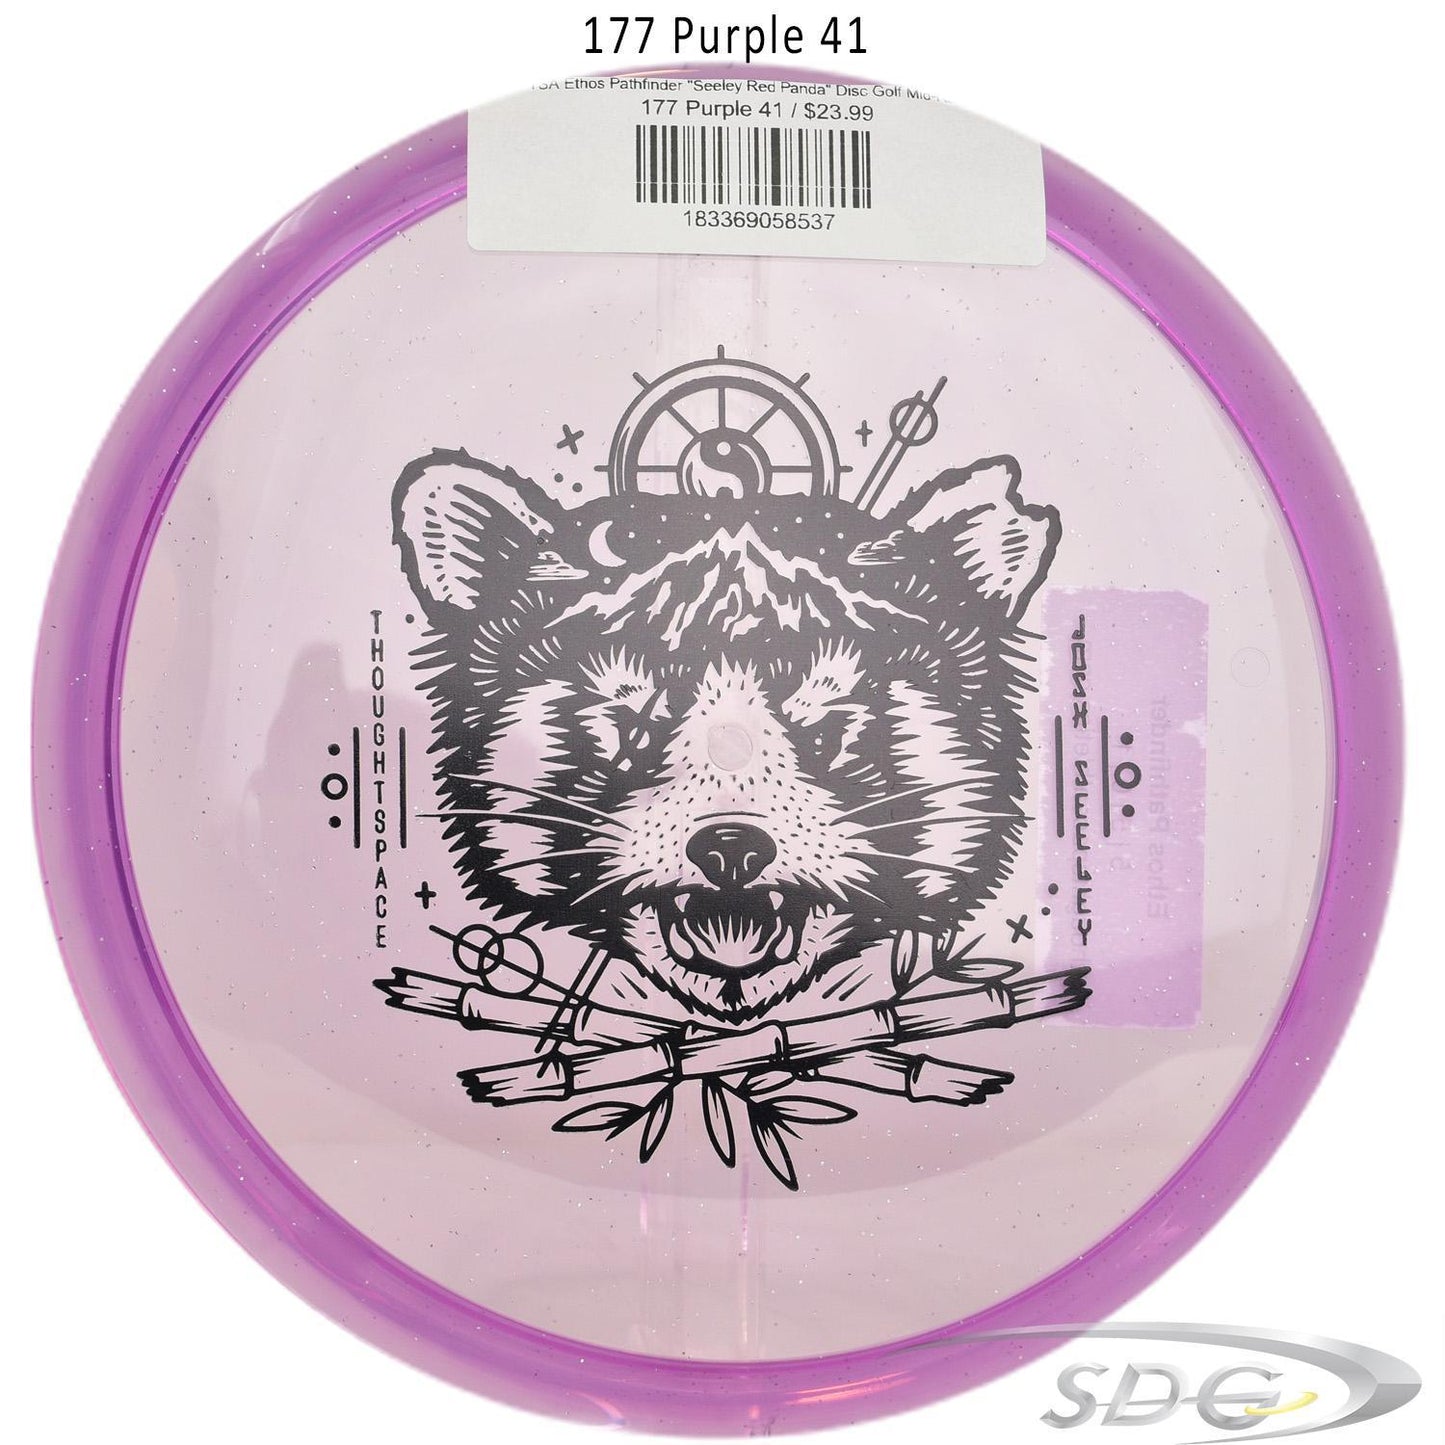 tsa-ethos-pathfinder-seeley-red-panda-disc-golf-mid-range 177 Purple 41 